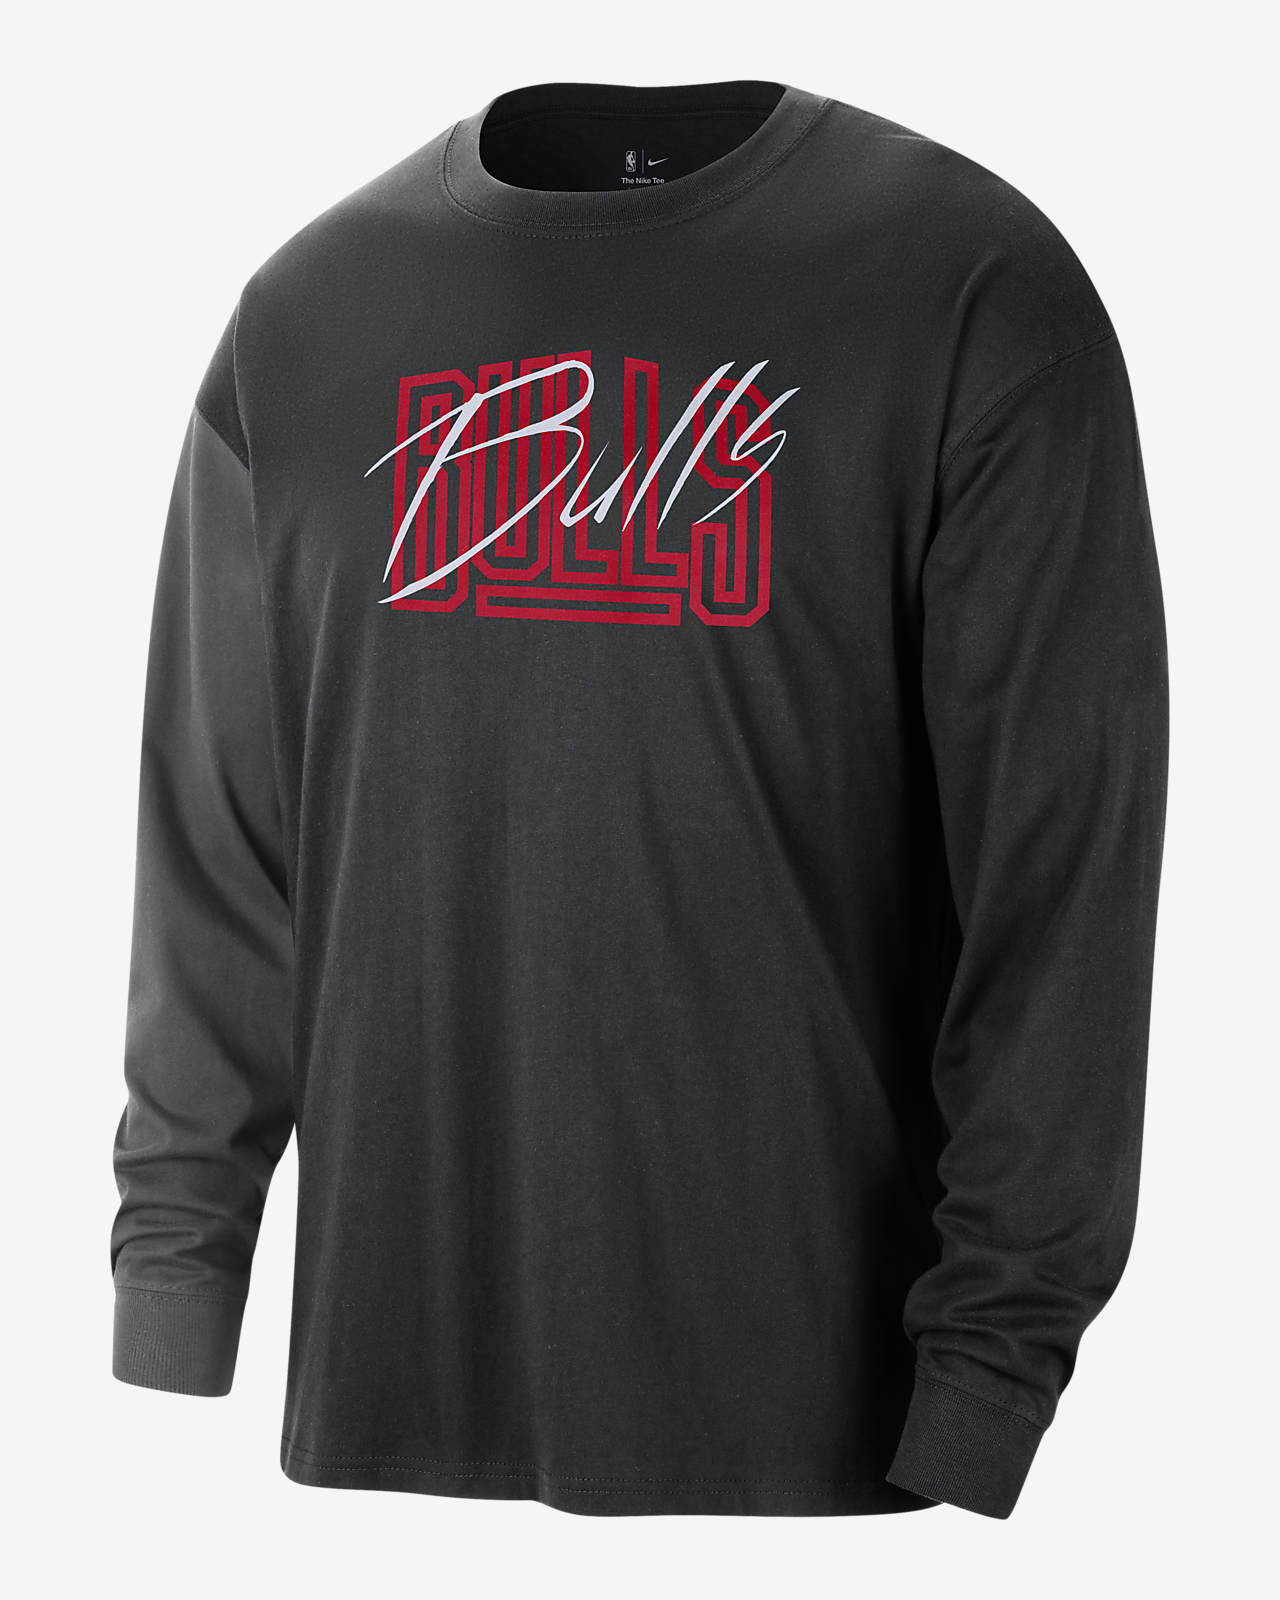 Chicago Bulls Max90 Men's Nike NBA T-Shirt - Black